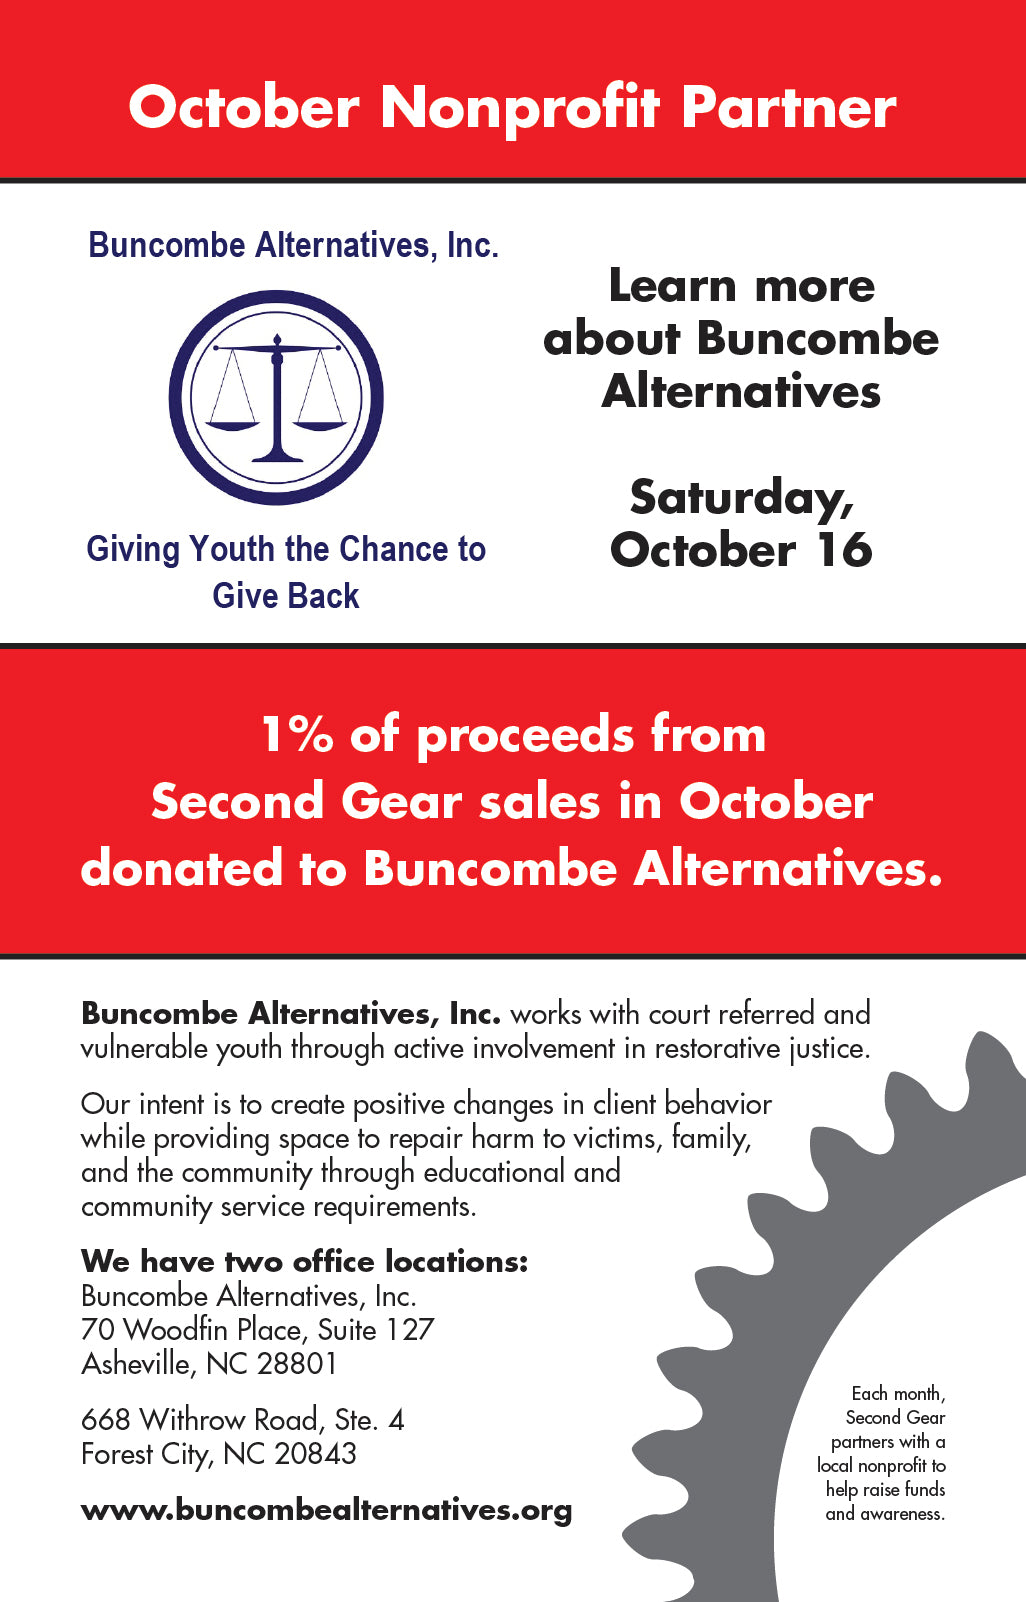 Second Gear's October Non-Profit: Buncombe Alternatives Inc.